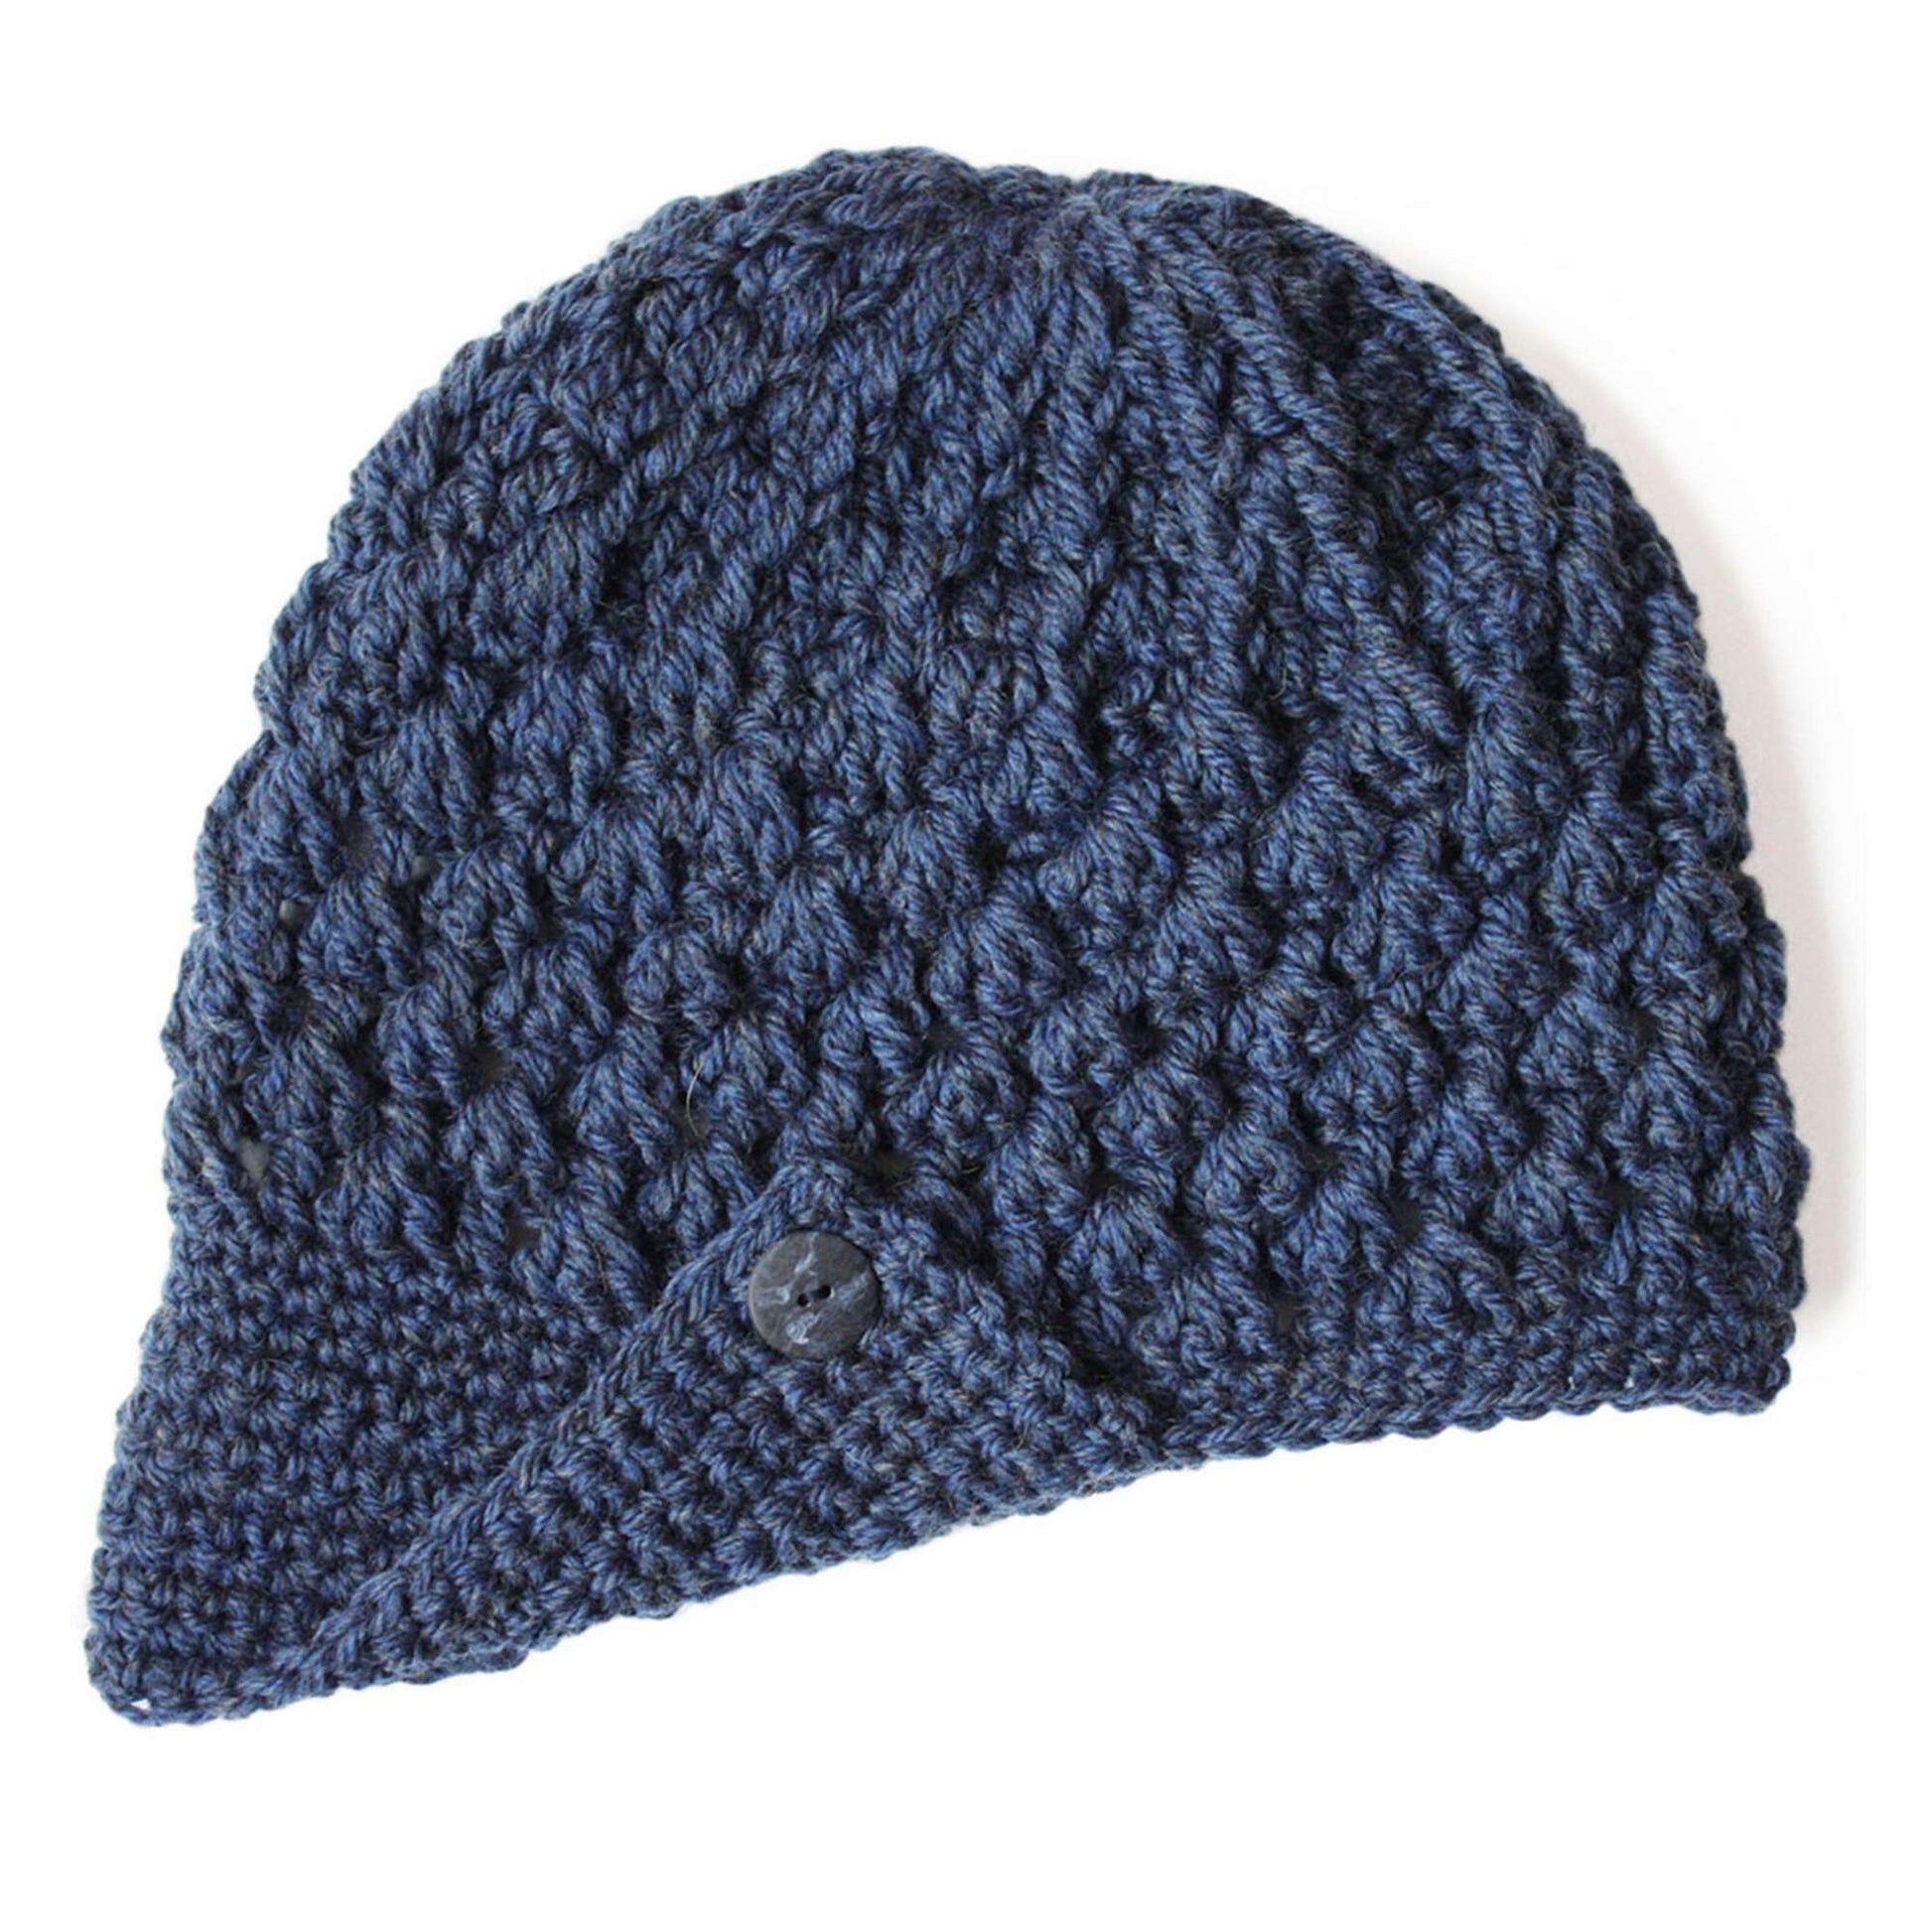 Free Patons Crochet To The Peak Hat Pattern